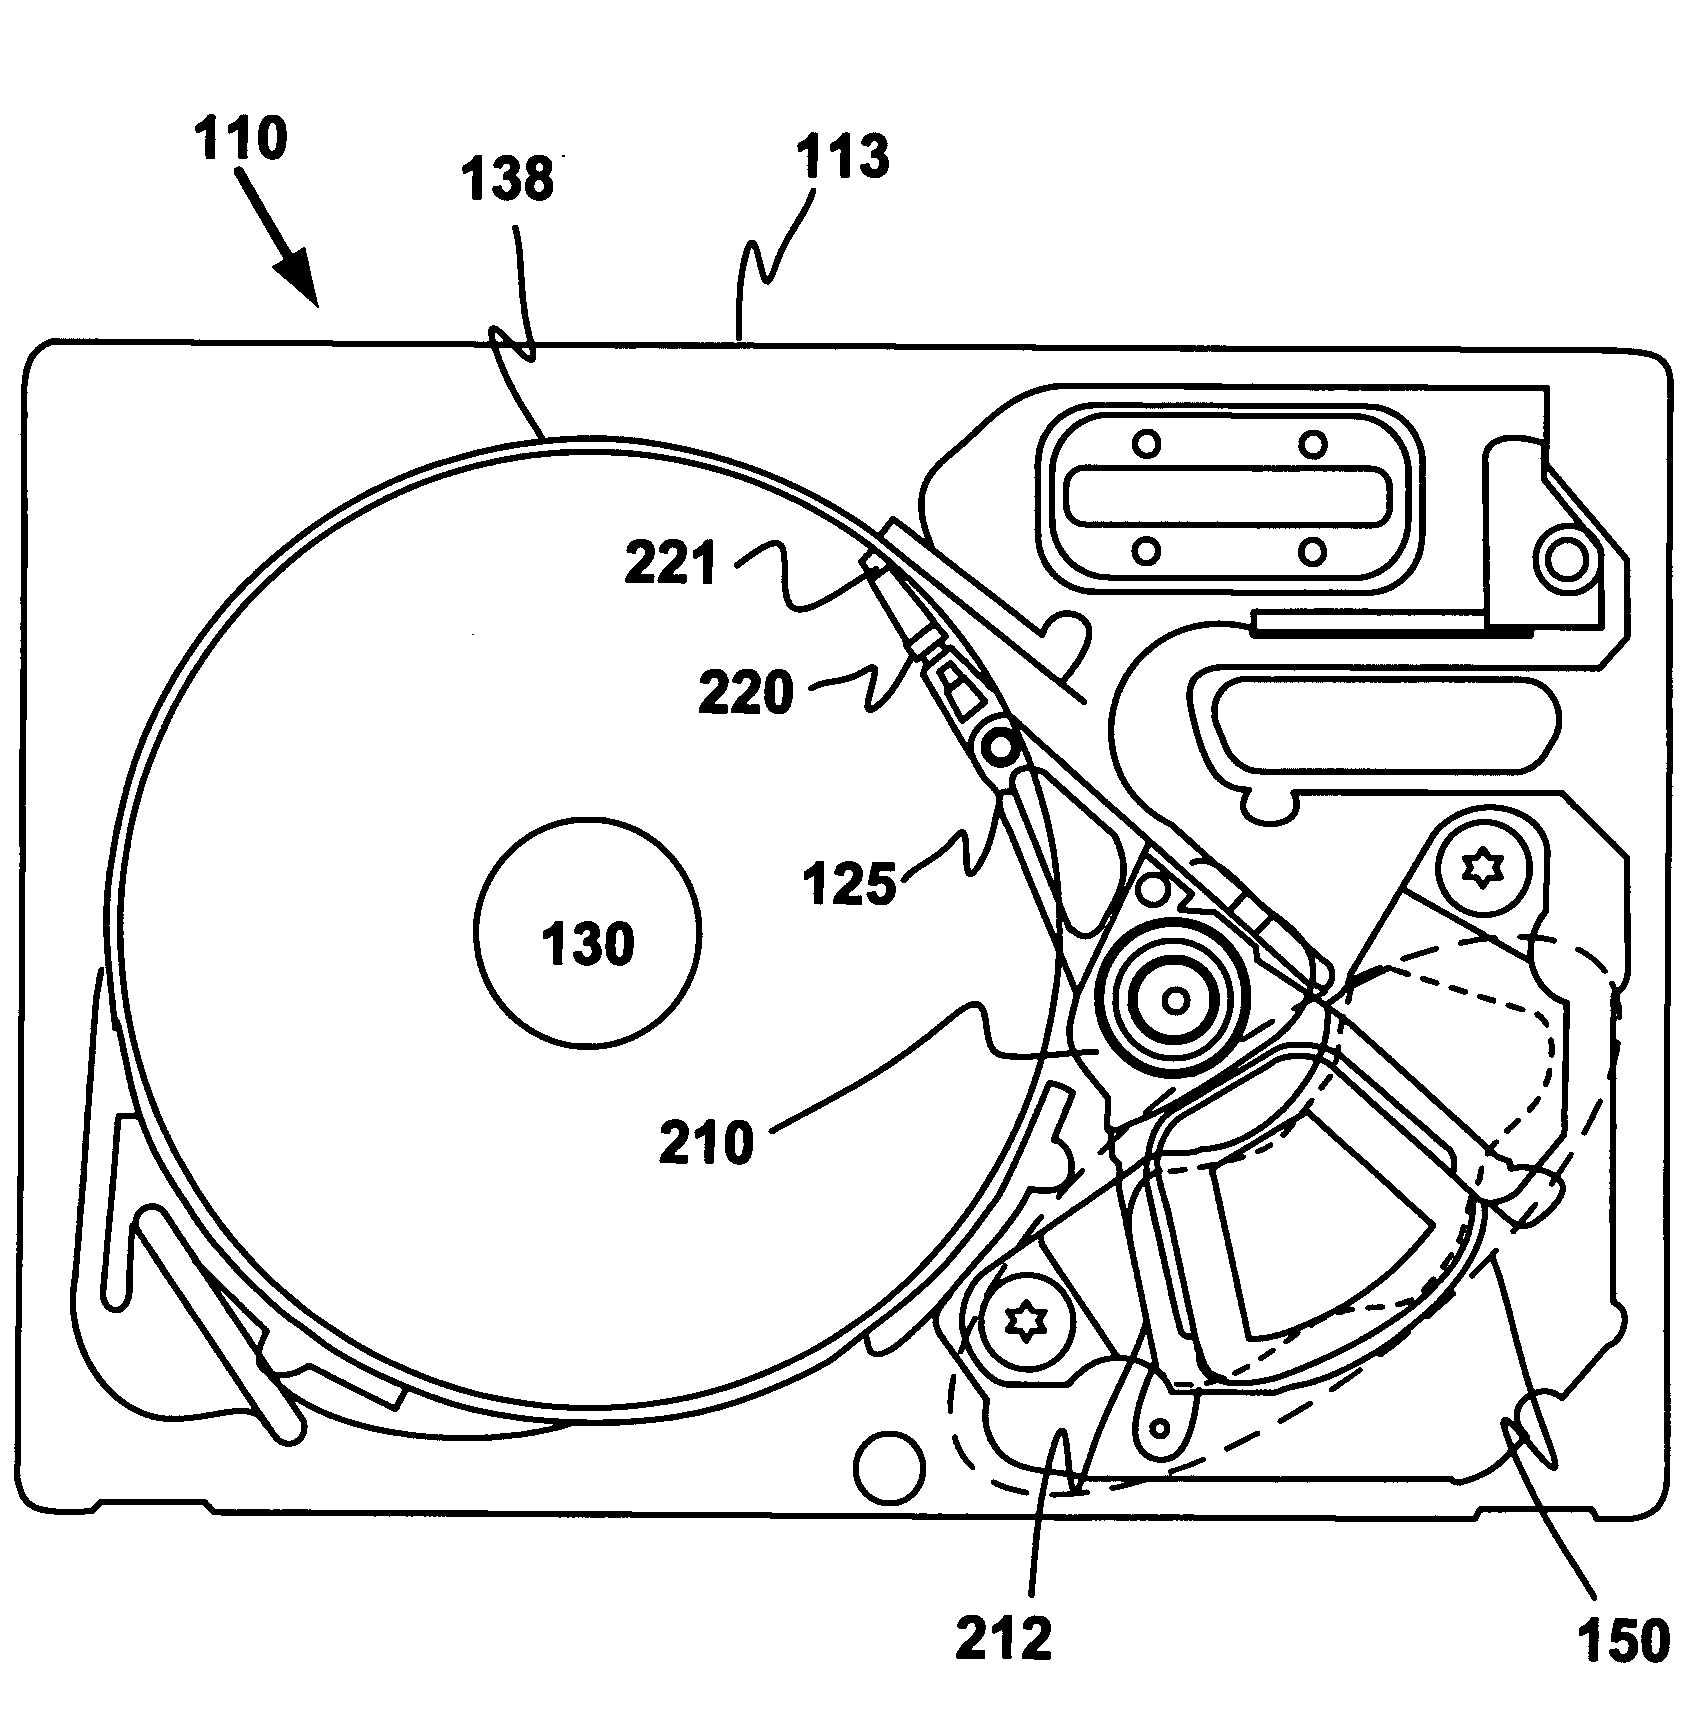 Integrated flexure tongue micro-actuator